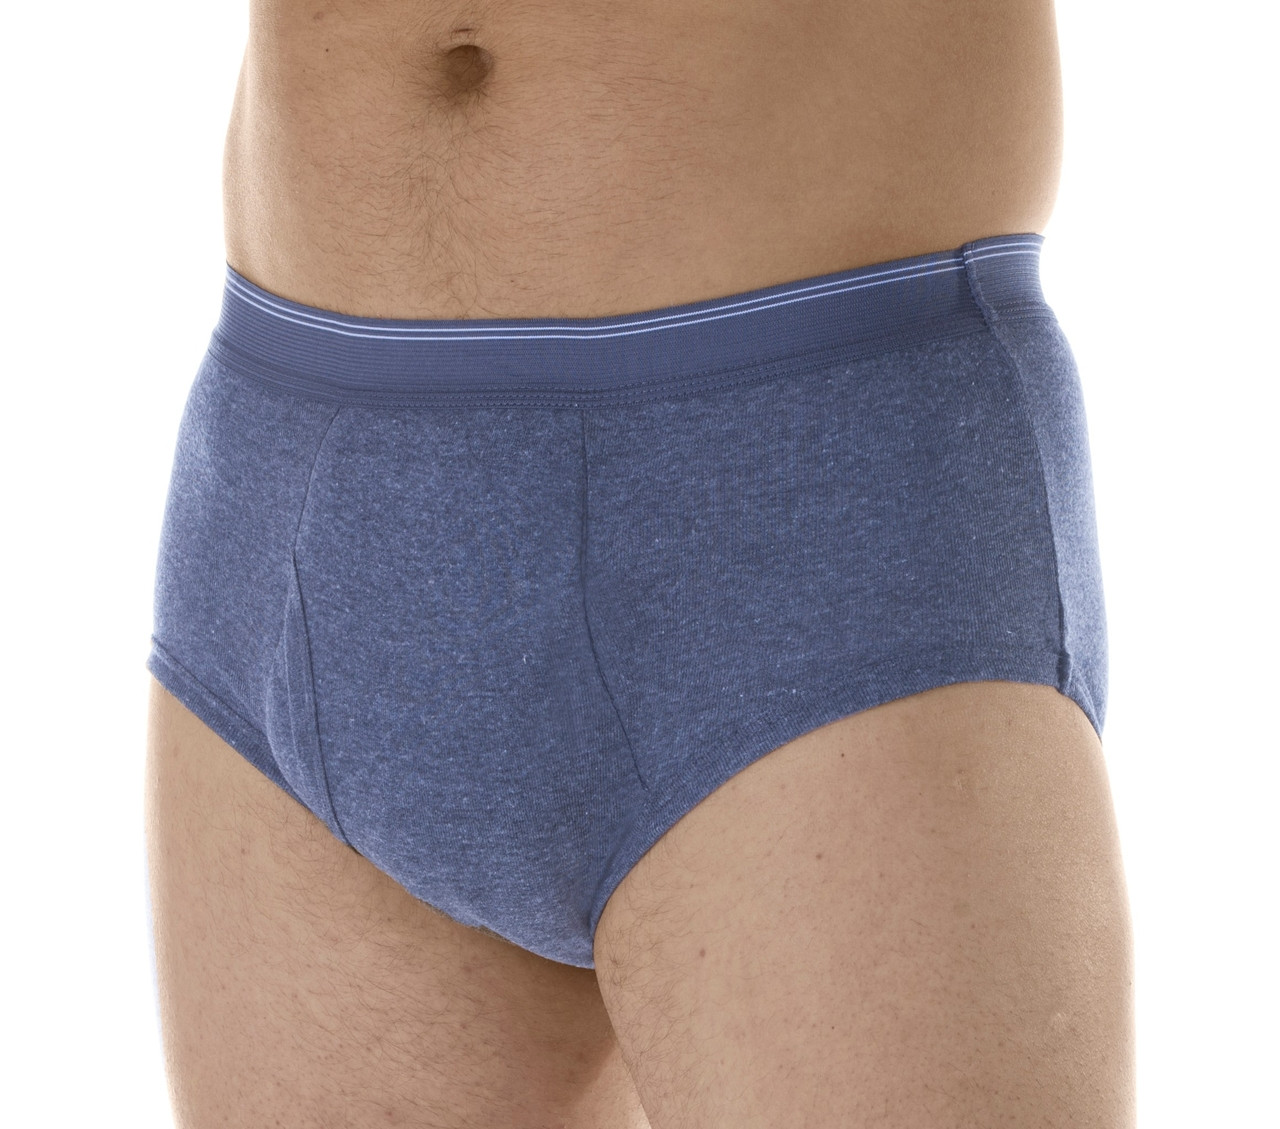 Newest Design Reusable Cotton Incontinence Underwear for Men